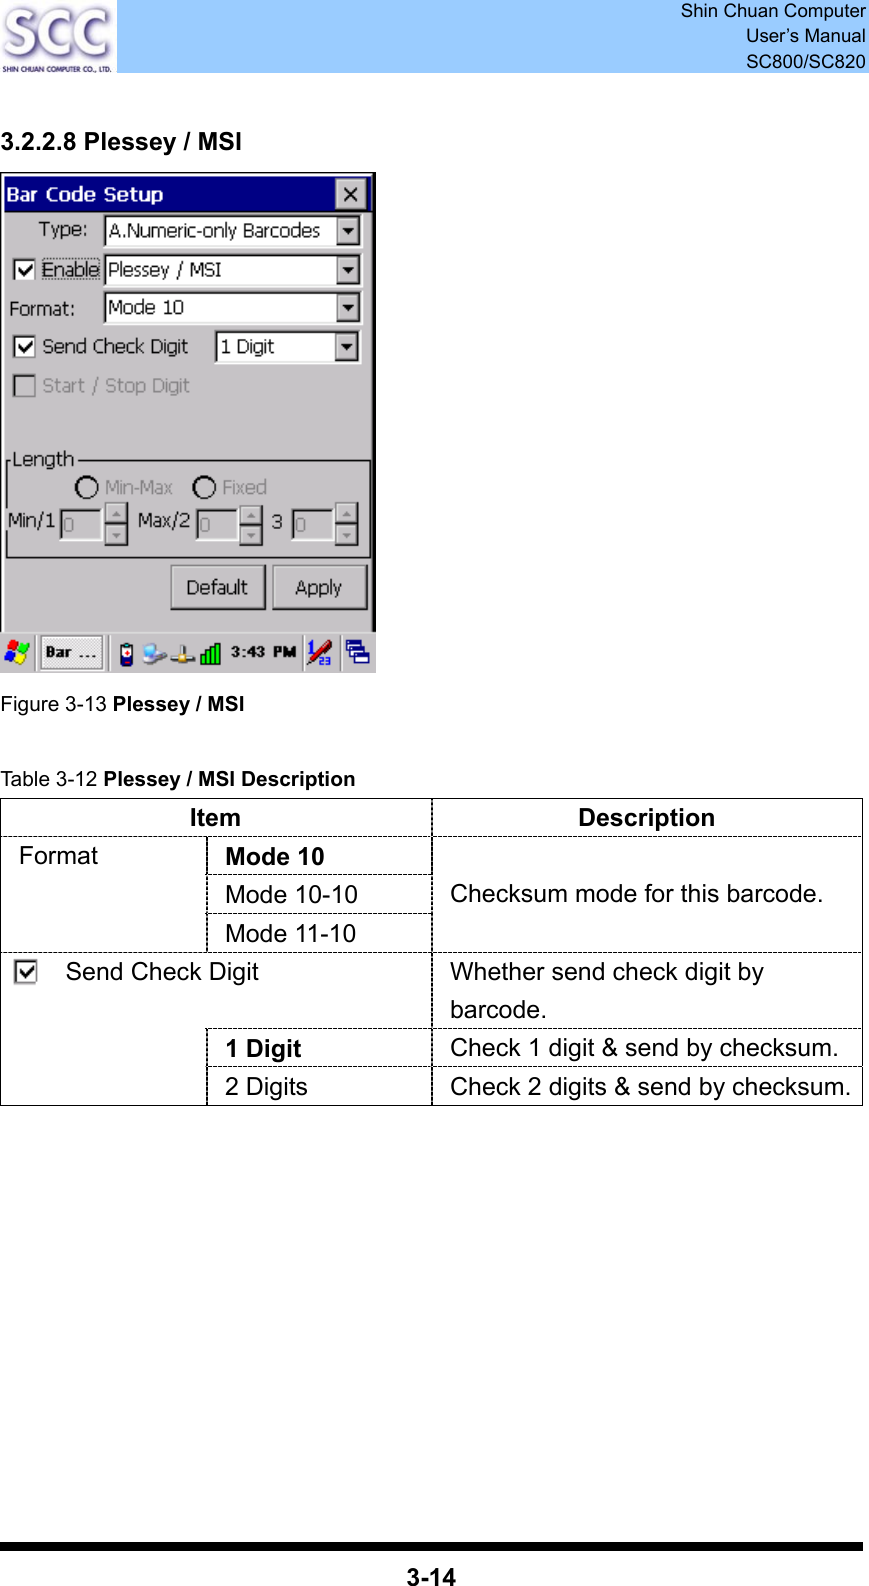  Shin Chuan Computer User’s Manual SC800/SC820  3-14  3.2.2.8 Plessey / MSI  Figure 3-13 Plessey / MSI  Table 3-12 Plessey / MSI Description Item Description Mode 10 Mode 10-10 Format Mode 11-10 Checksum mode for this barcode. Send Check Digit  Whether send check digit by barcode. 1 Digit  Check 1 digit &amp; send by checksum.  2 Digits  Check 2 digits &amp; send by checksum.          